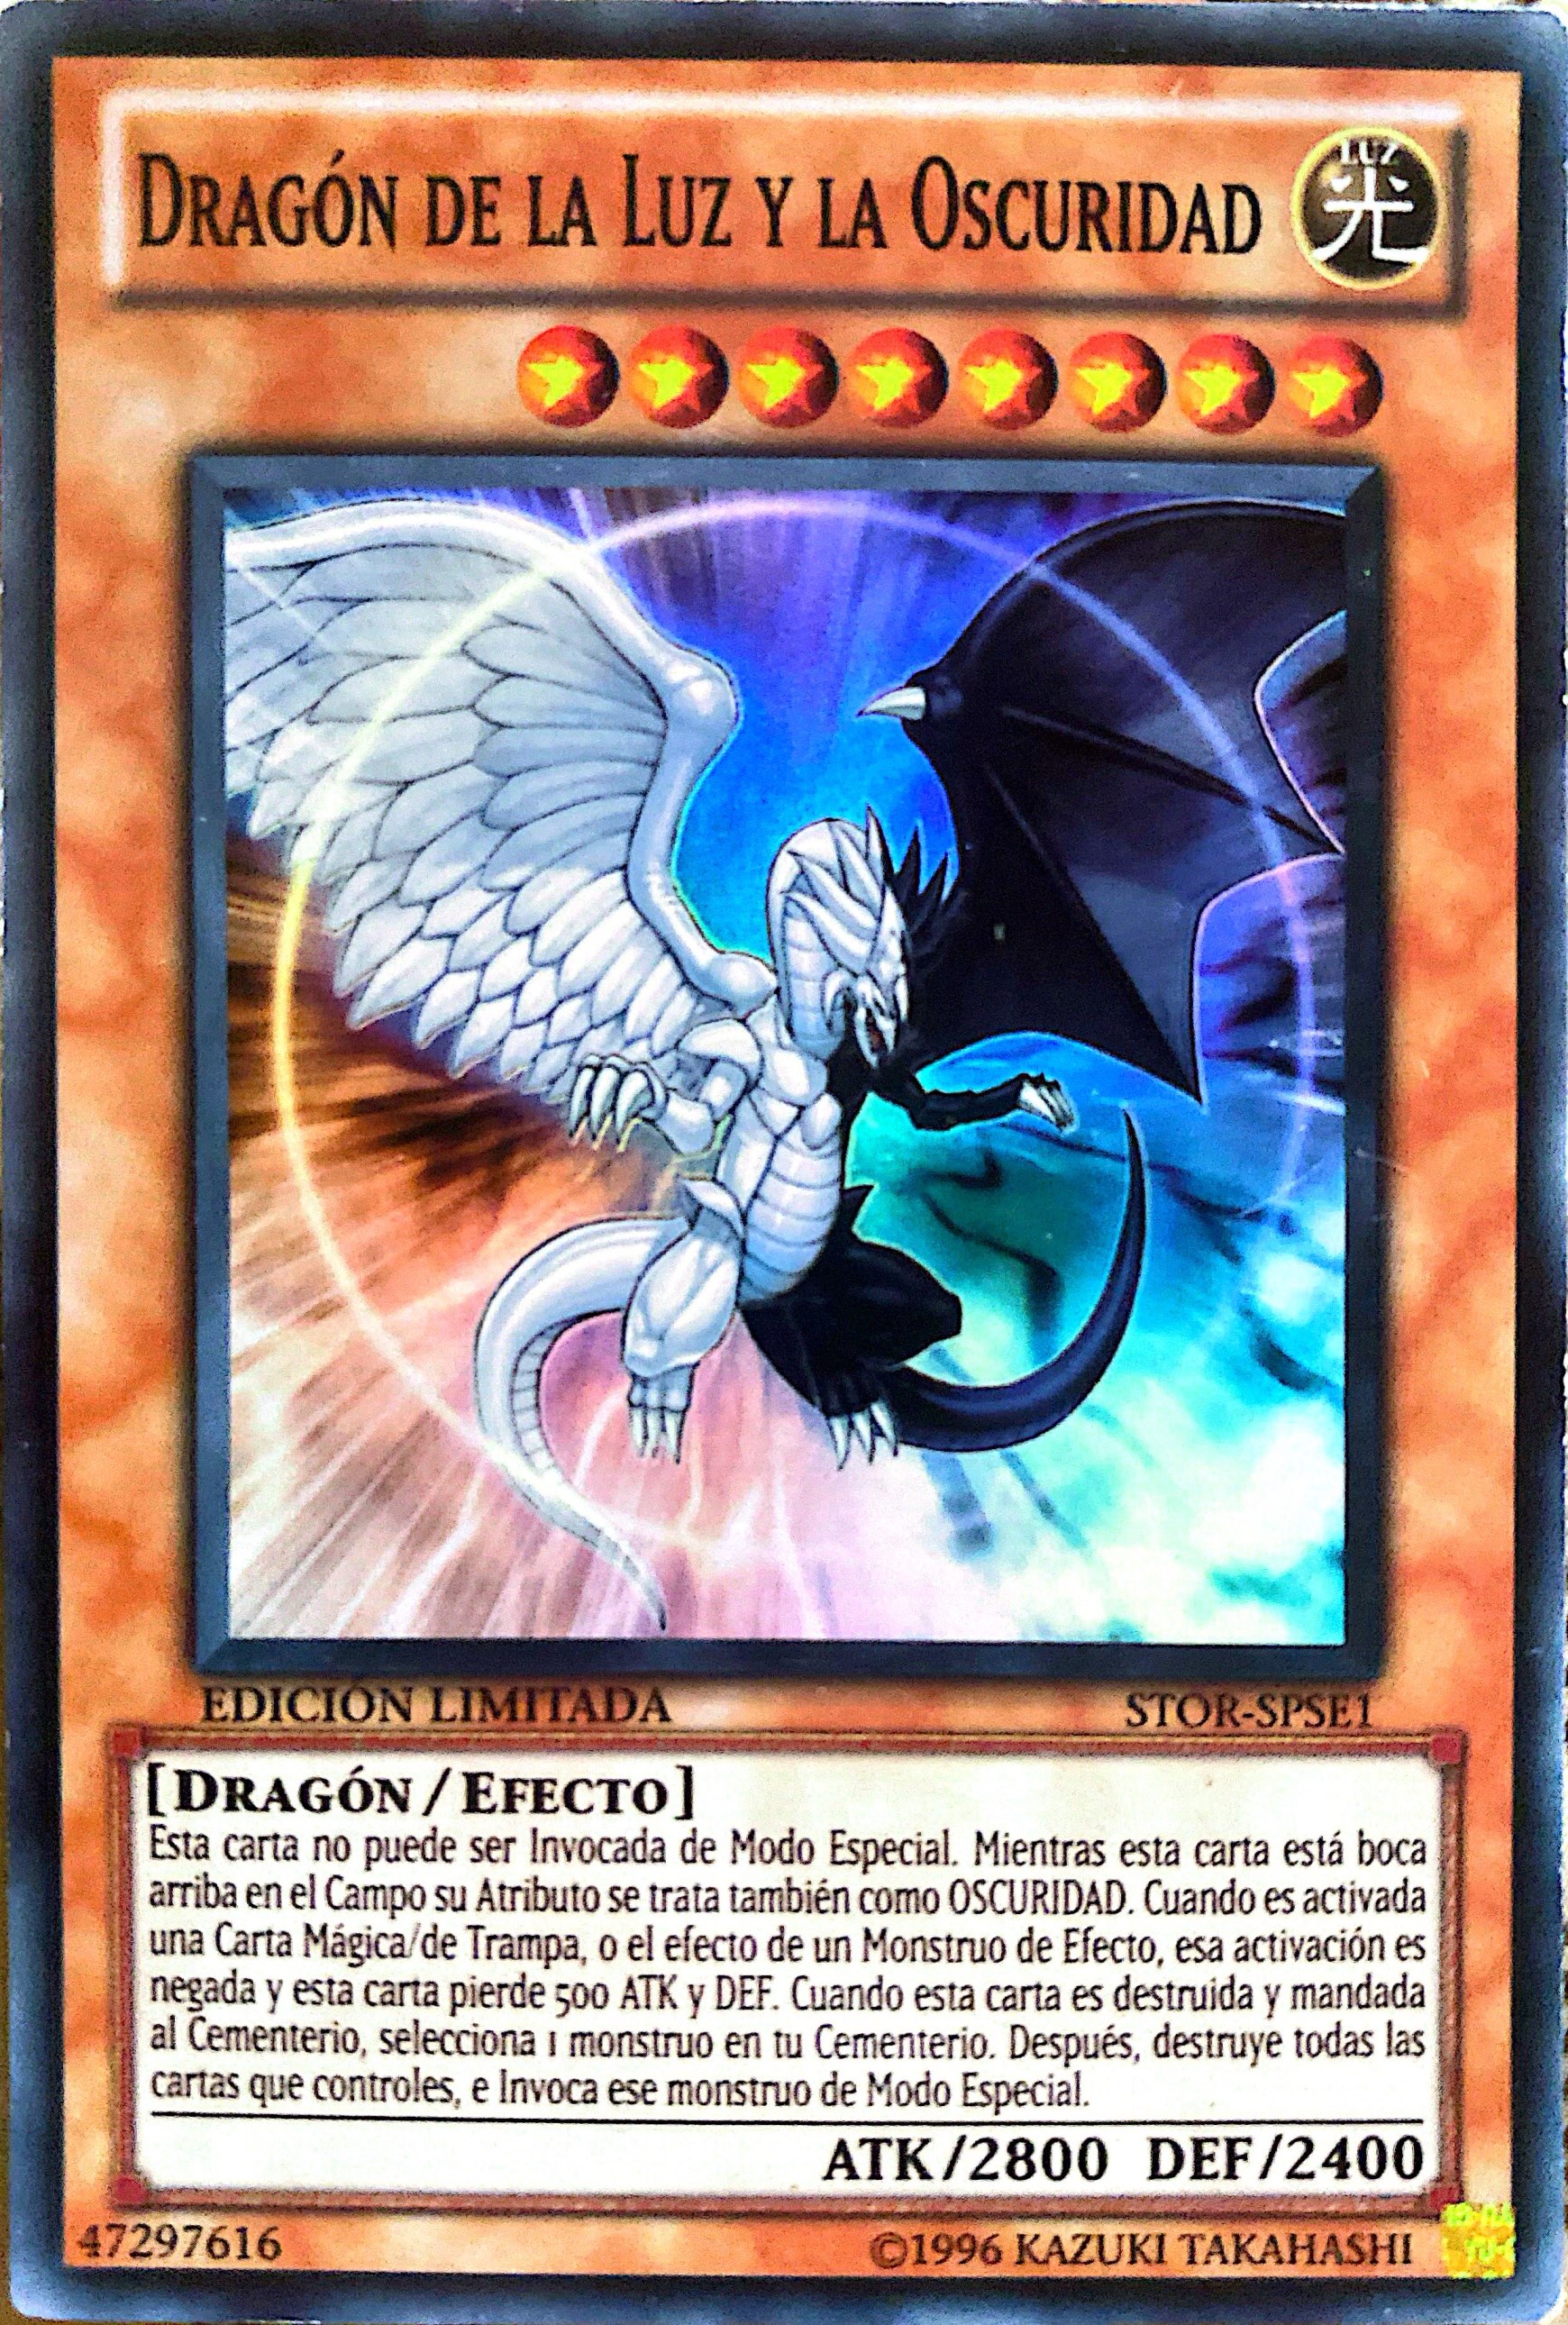 Light and Darkness Dragon carta yugi STOR-SPSE1 Super Rare